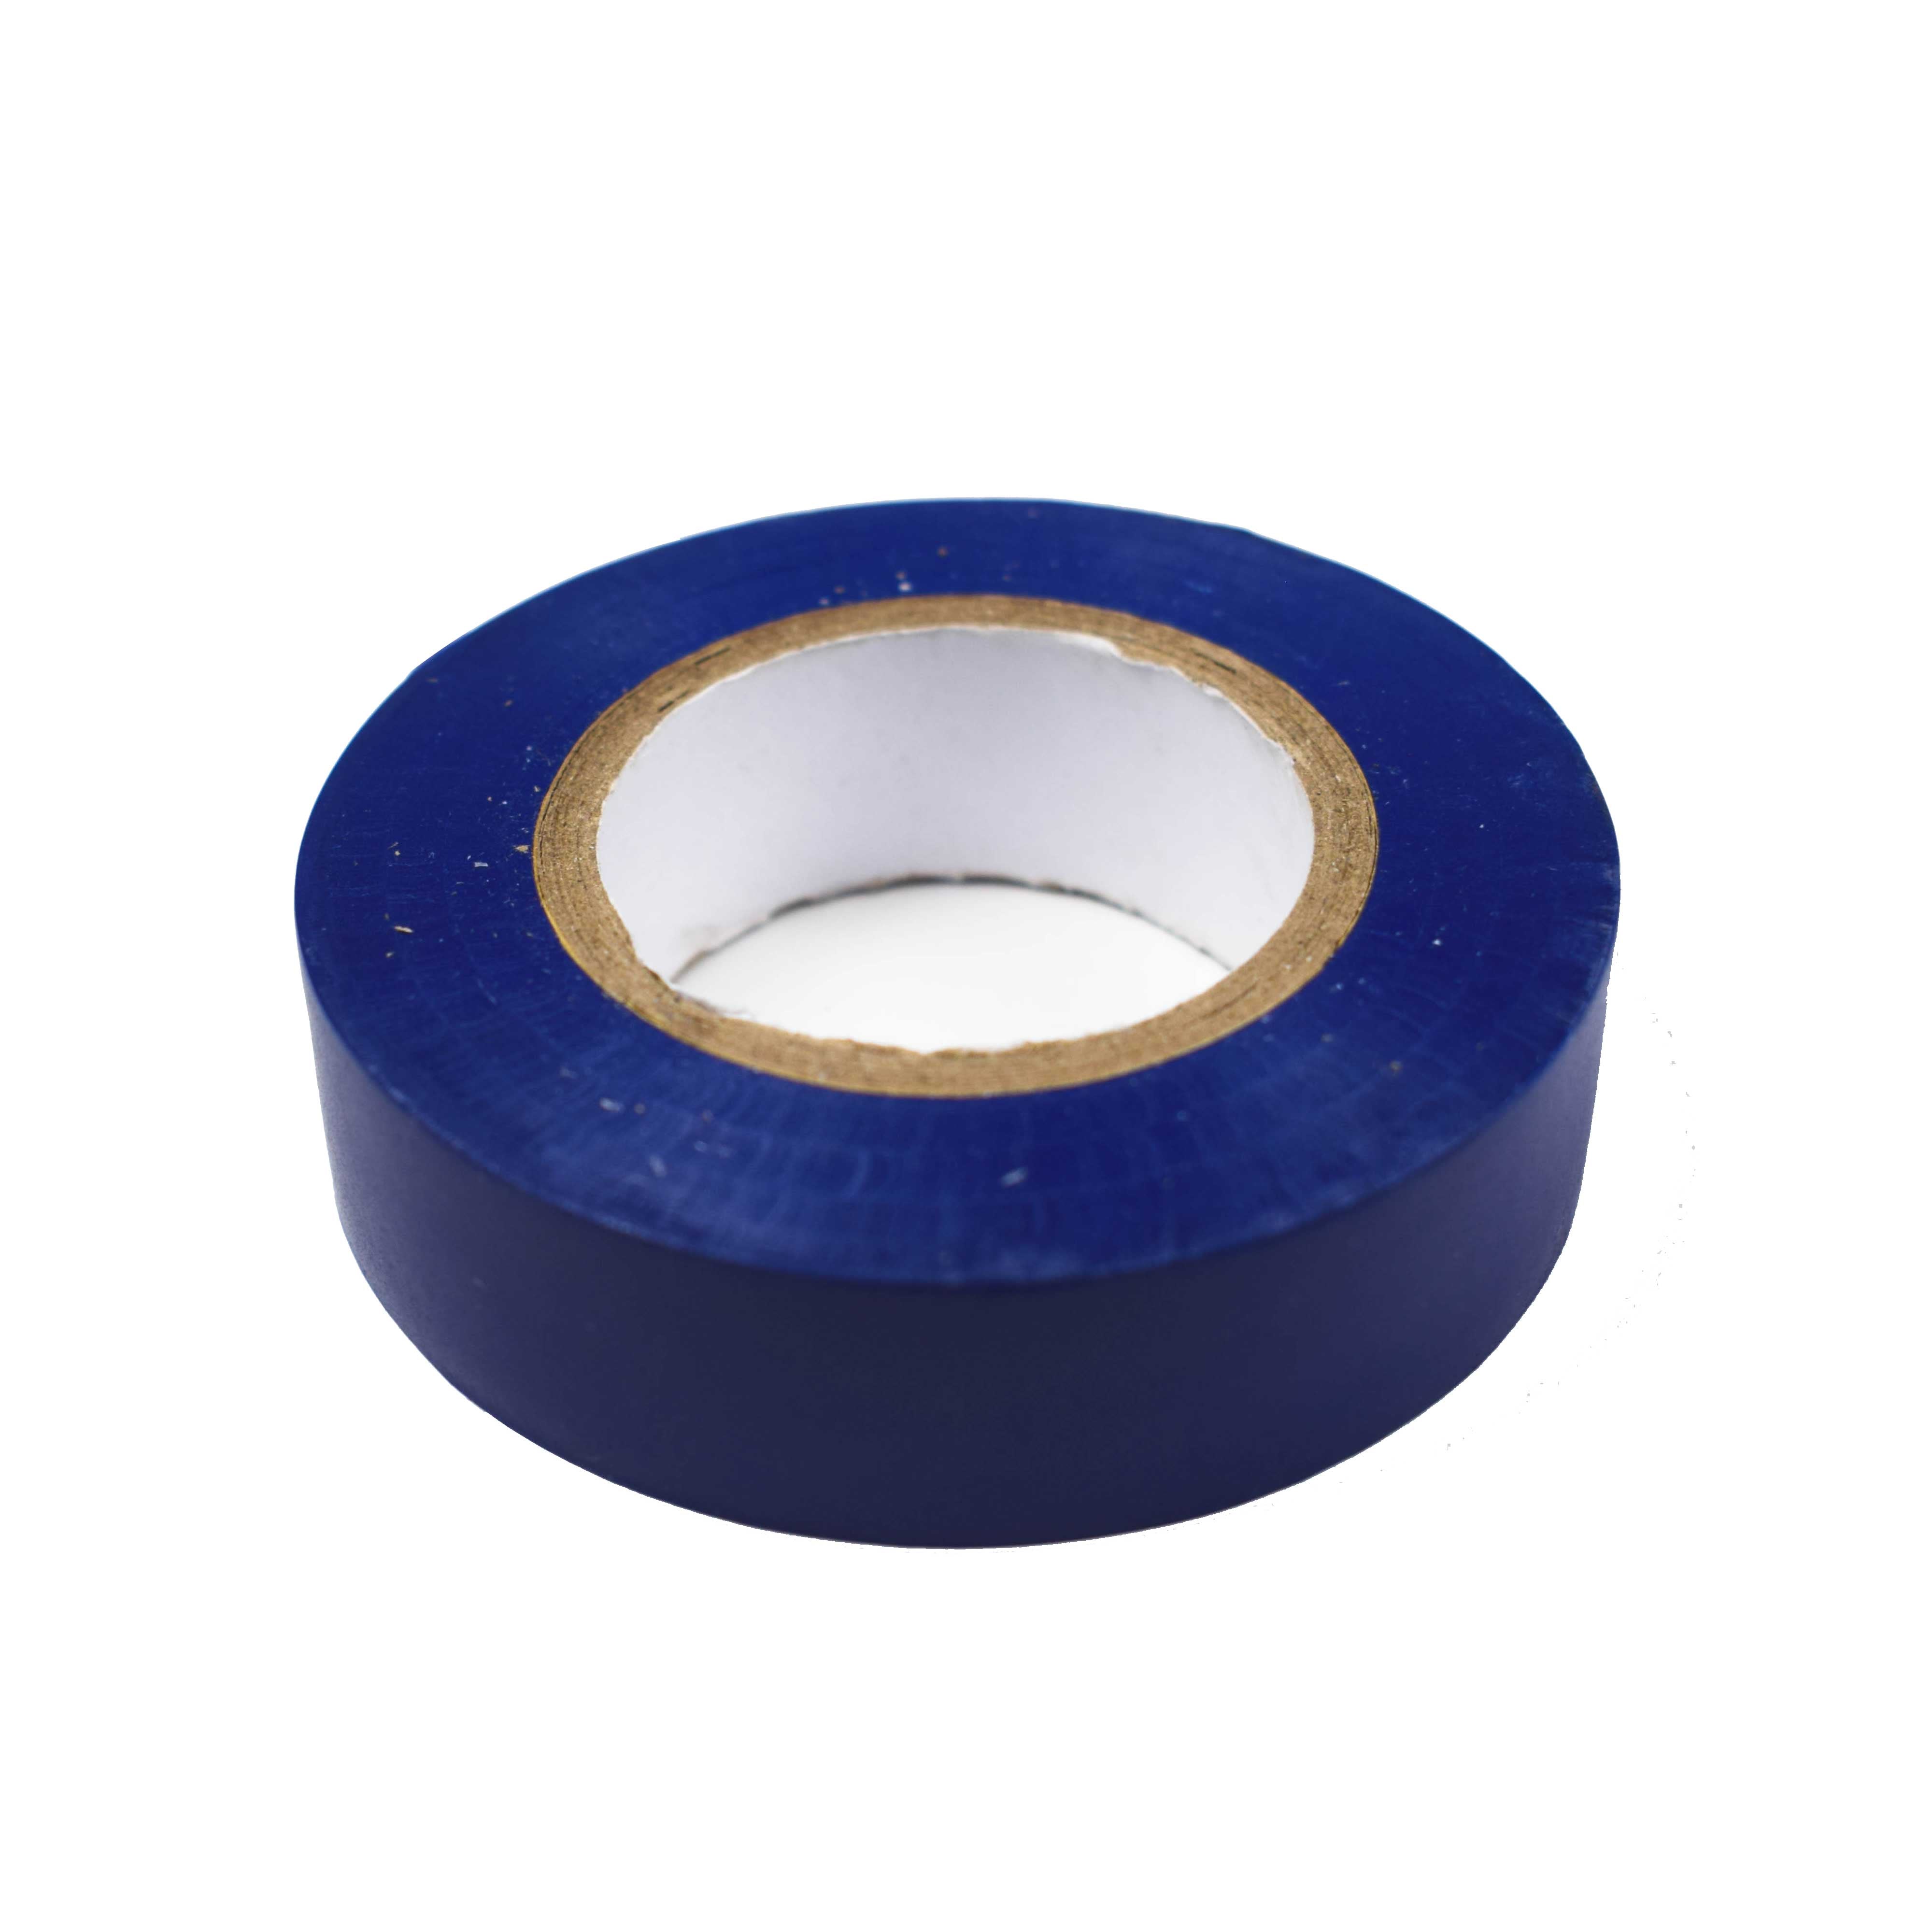 Buy 18mm Blue PVC Insulation Tape (25 Meter) at HNHcart.com